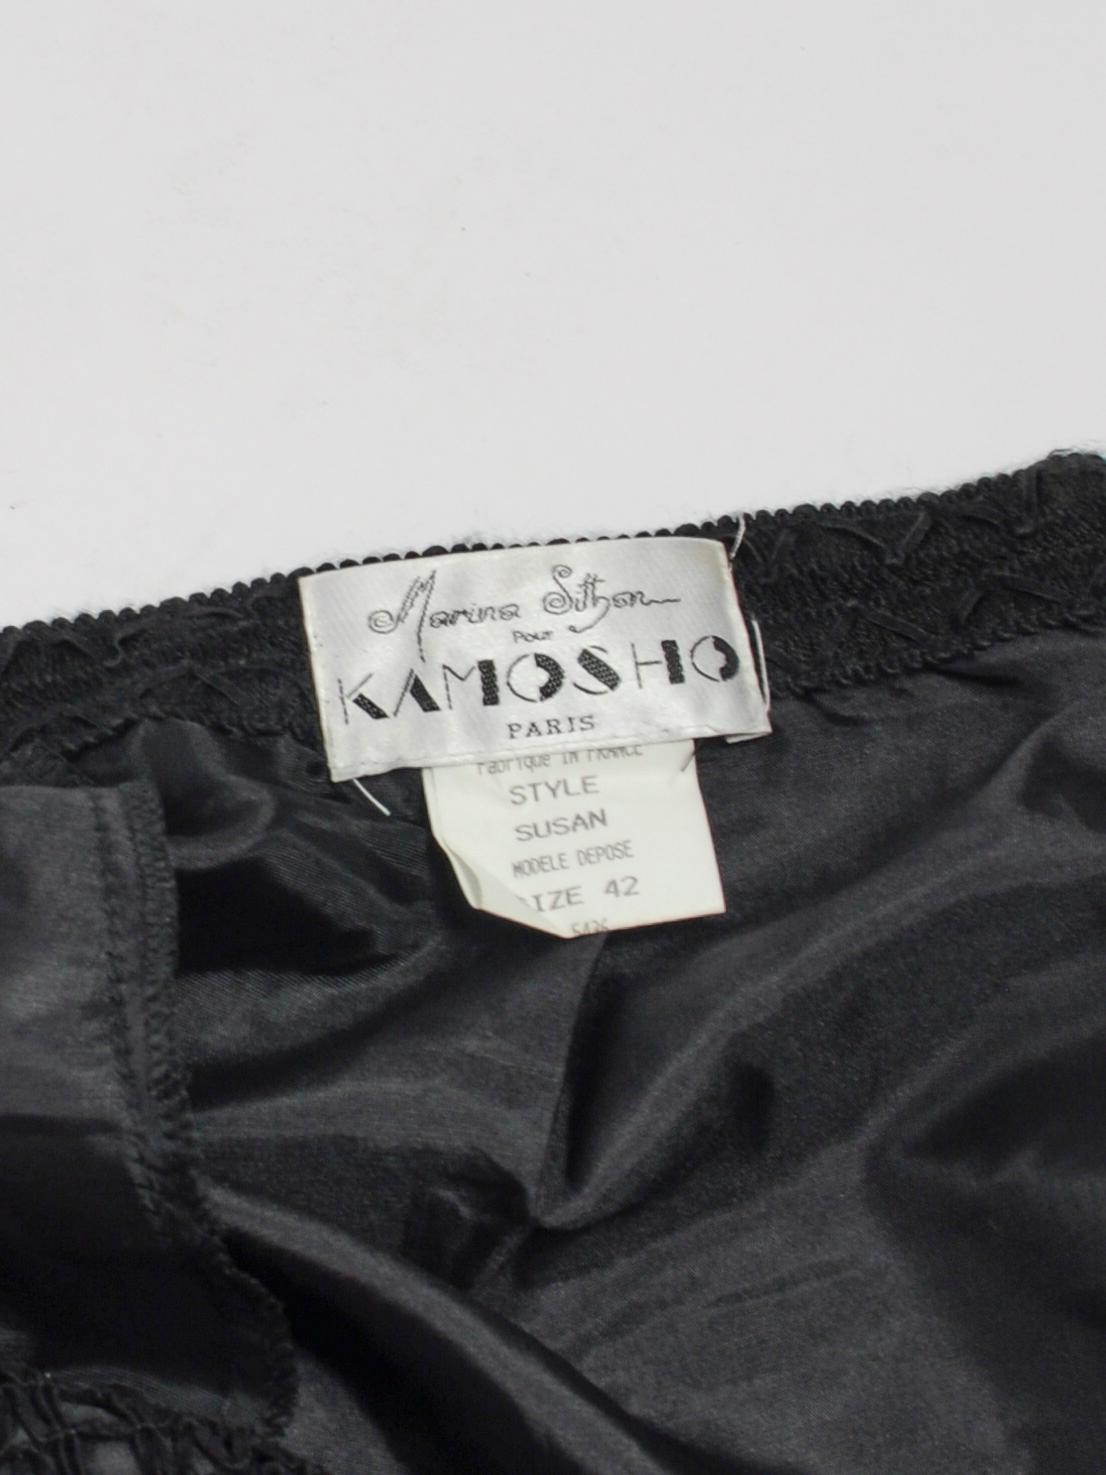 Marina Sitbon for Kamosho Paris 2-piece Fringe Crop Top and Mini Skirt Set 1990s For Sale 5